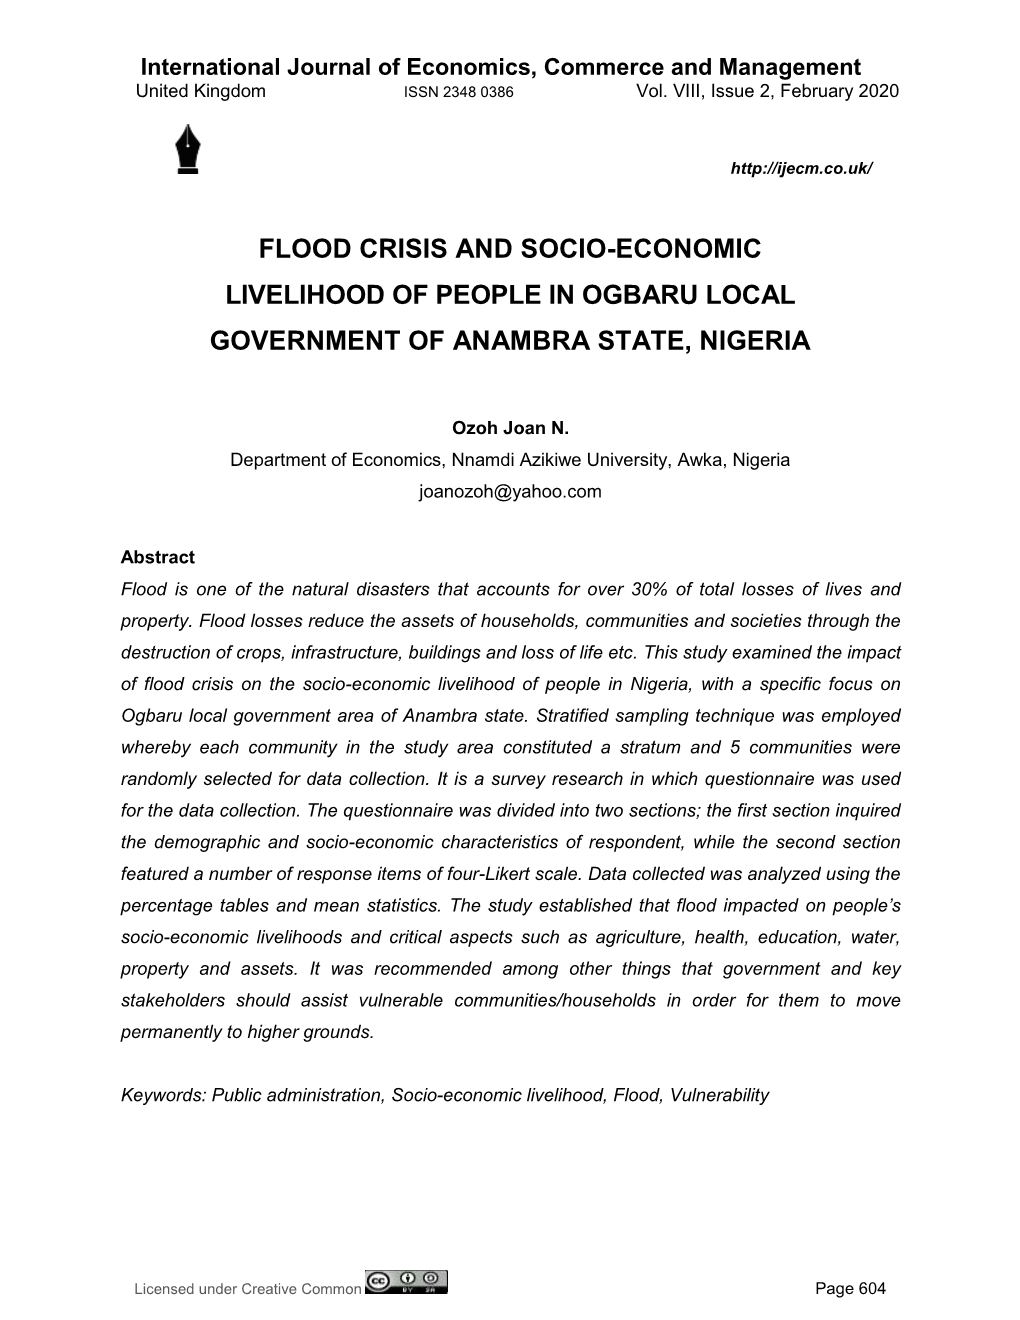 Flood Crisis and Socio-Economic Livelihood of People in Ogbaru Local Government of Anambra State, Nigeria